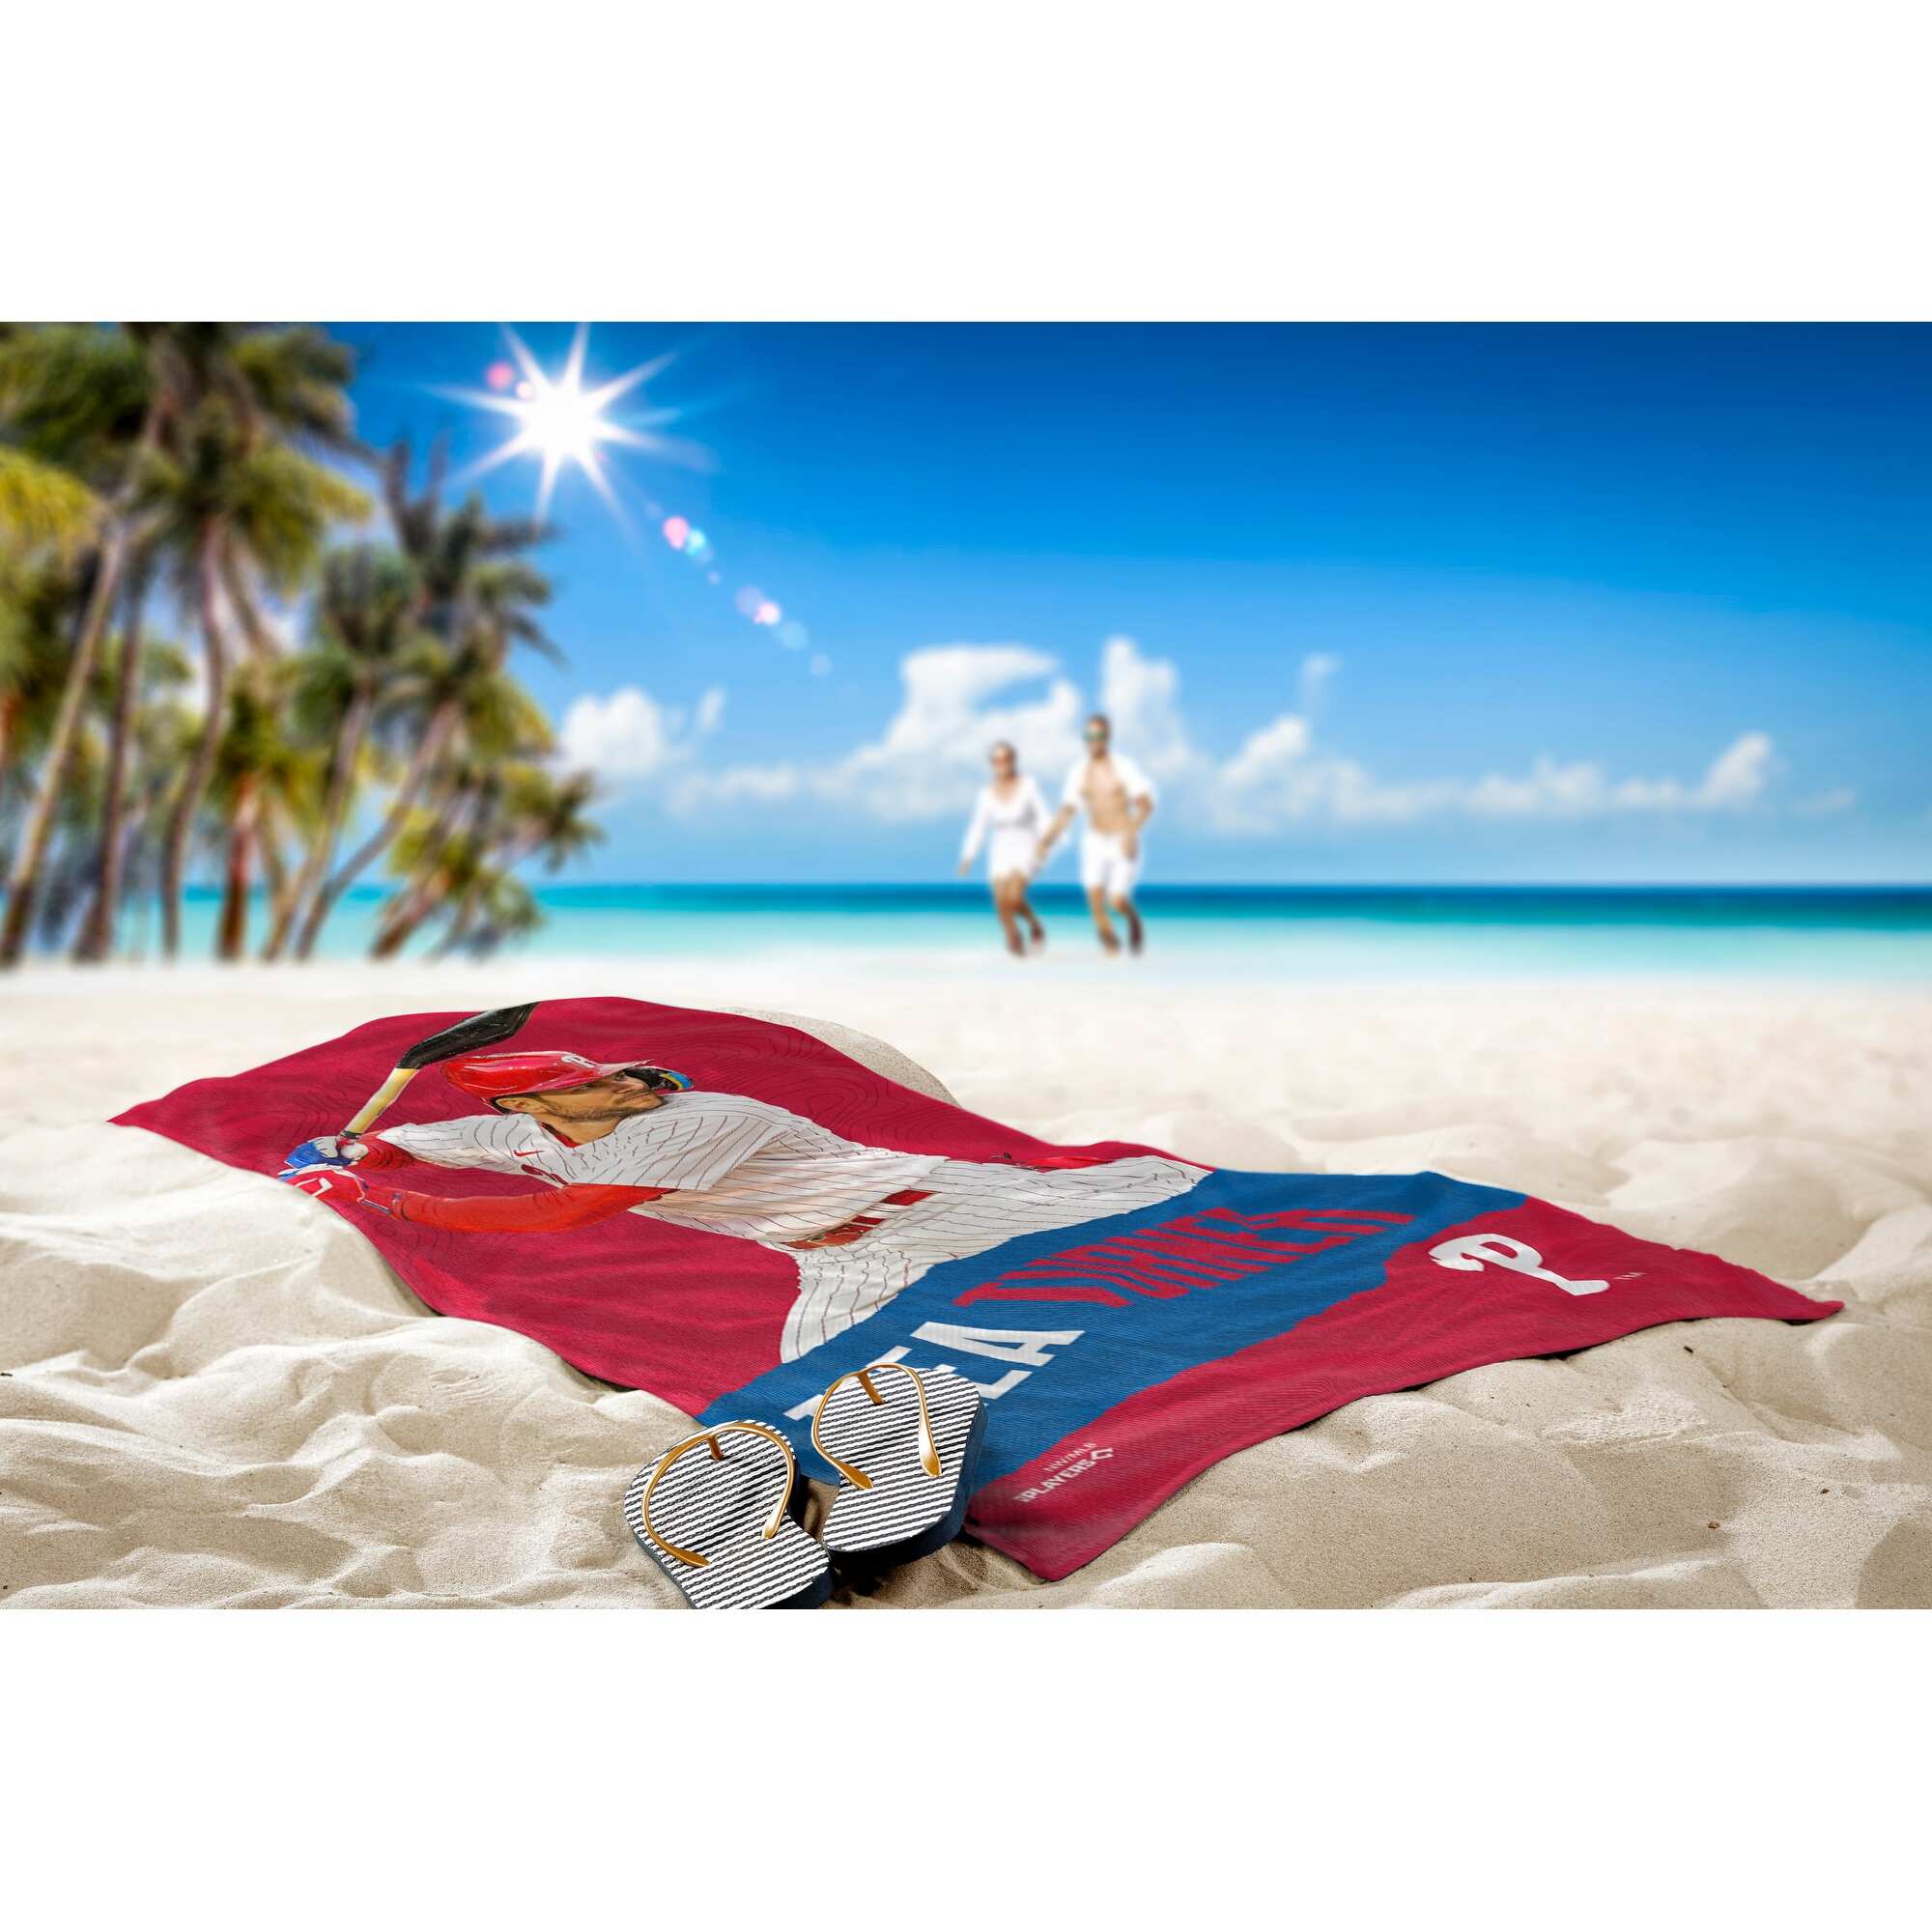 MLB Phillies - 23 Trea Turner - Printed Beach Towel - 30x60